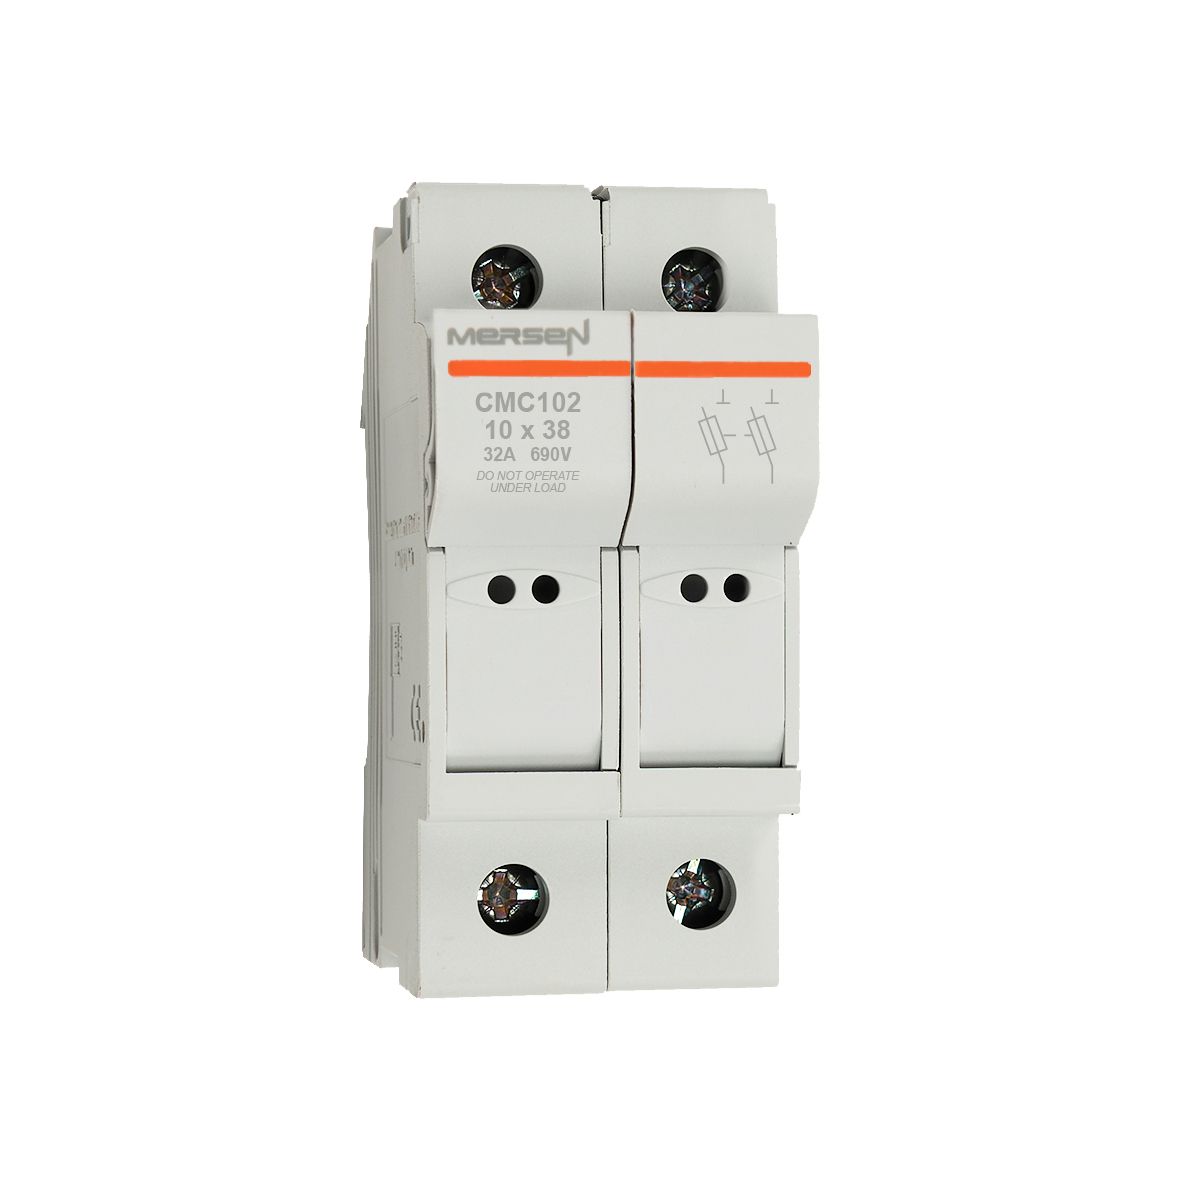 H1062699 - modular fuse holder, IEC, 2P, 10x38, DIN rail mounting, IP20